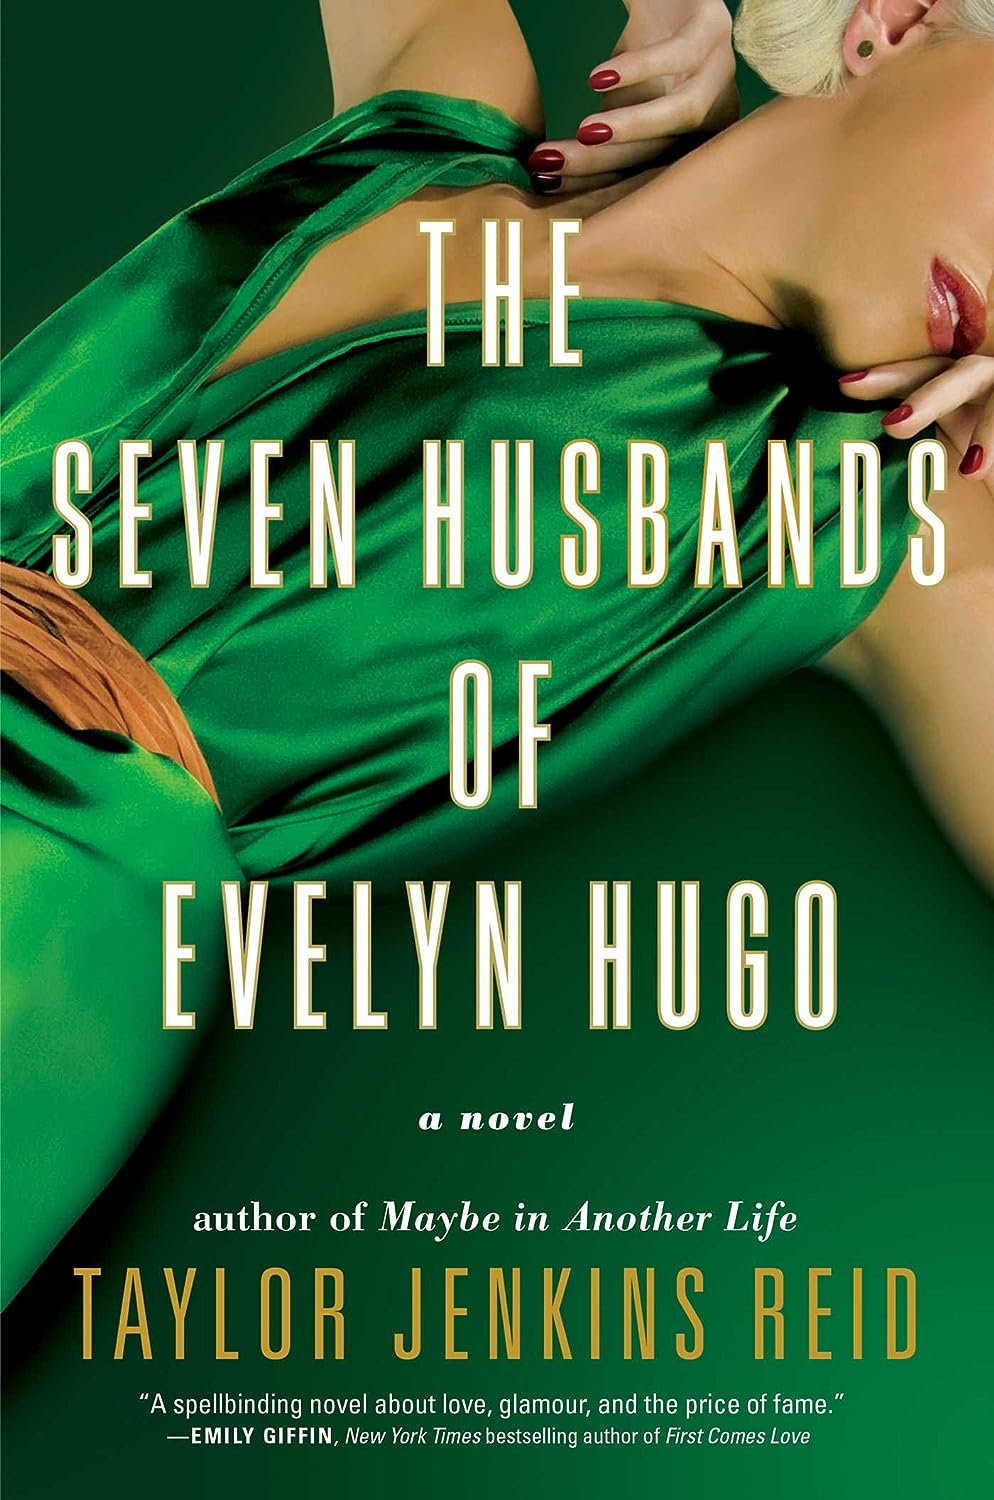 Cover of the Seven Husbands of Evelyn Hugo